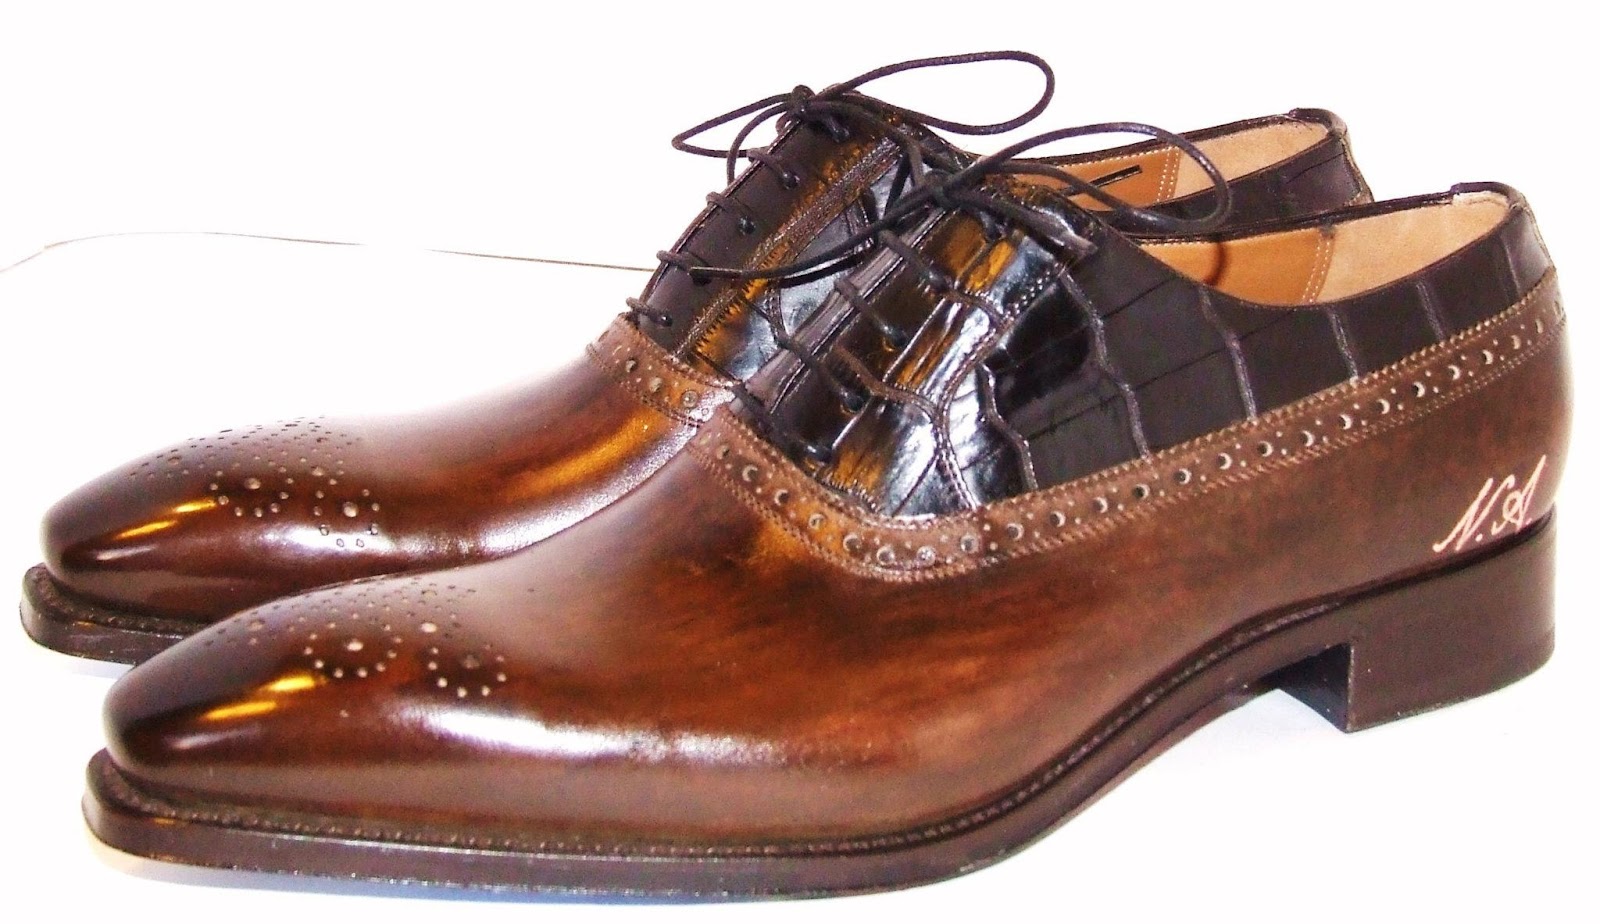 Initials-NA-Bespoke-Hand-Made-Italian-Ivan-Crivellaro-Shoes-Scarpe-Limited-Edition-Crocodile-Leather-Painted-Soles.jpg